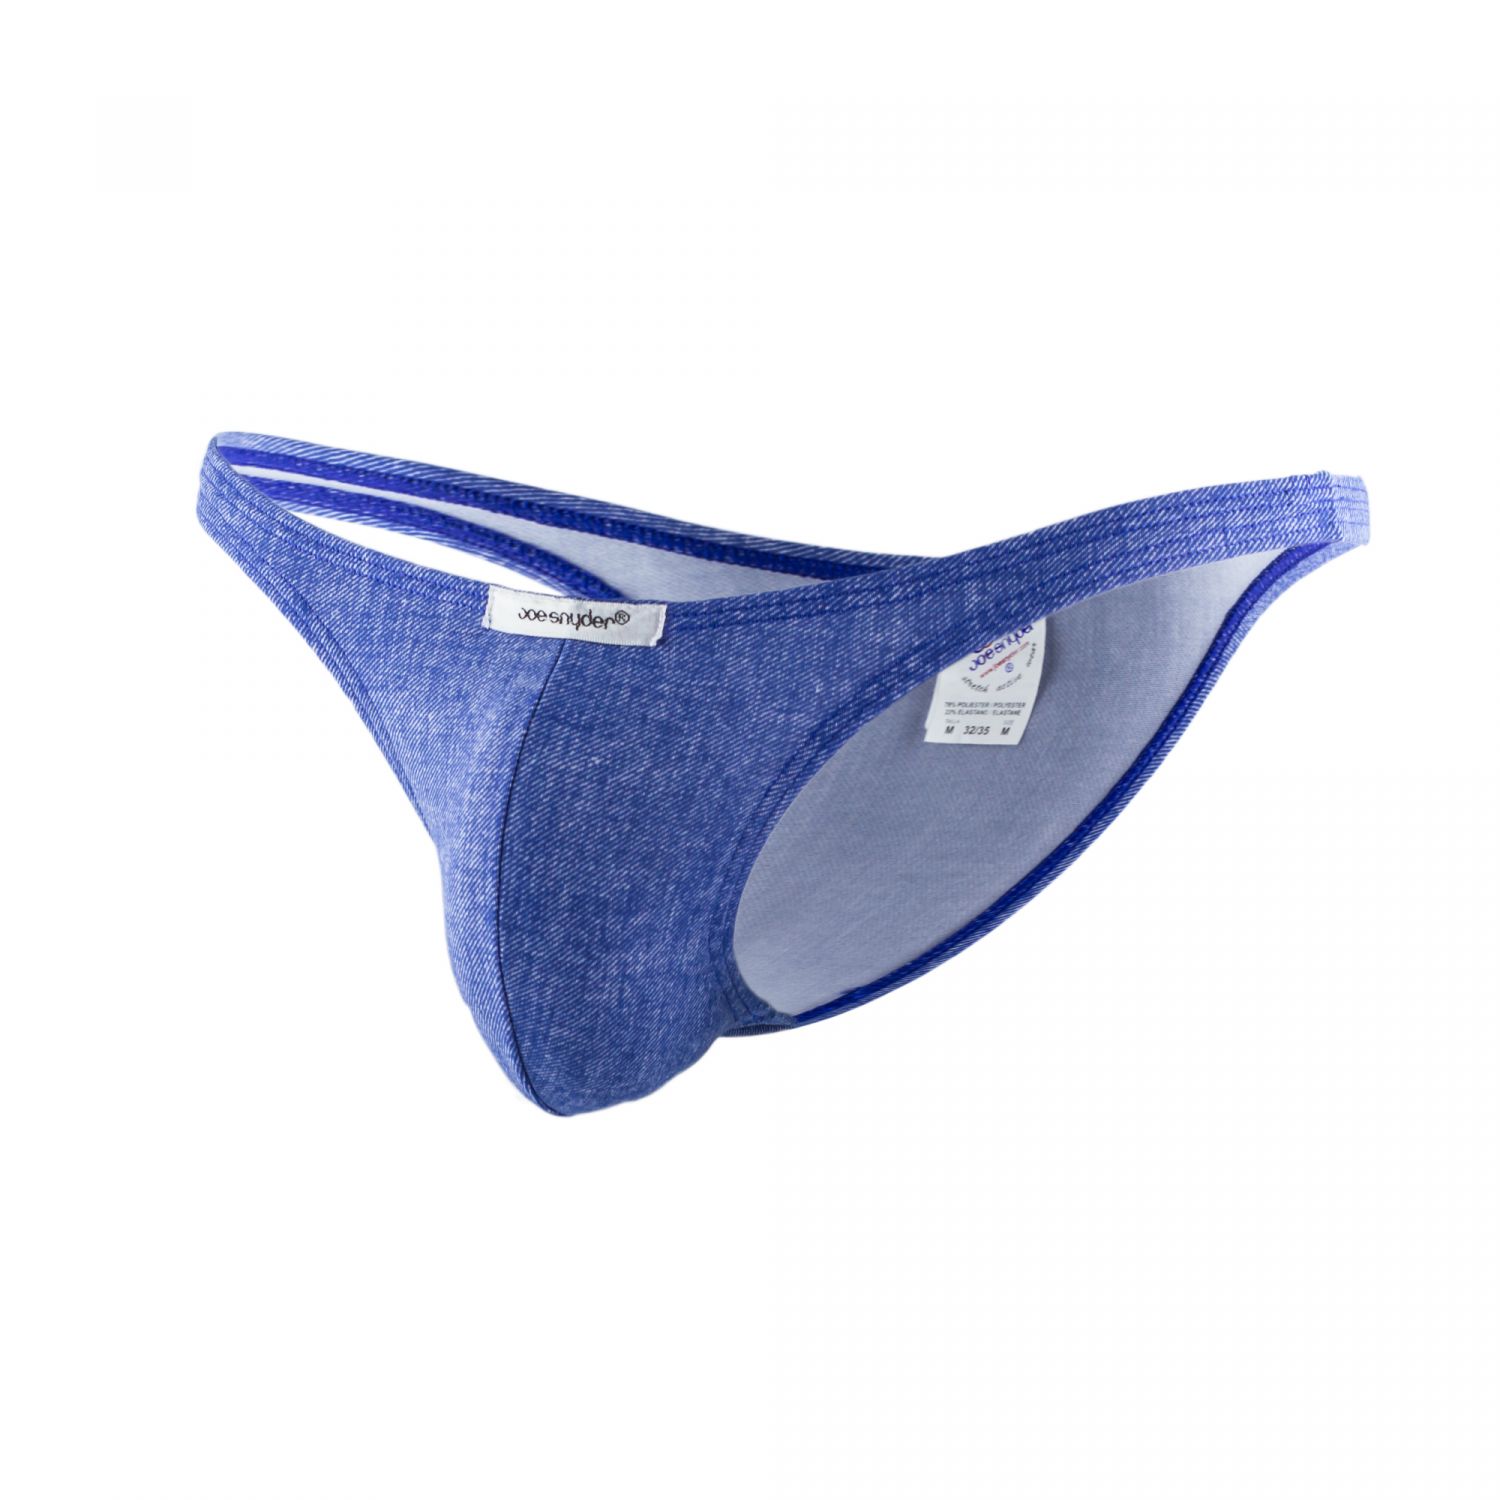 Joe Snyder Underwear Shining Capri Brazilian Brief Denim Blue JS07 ...